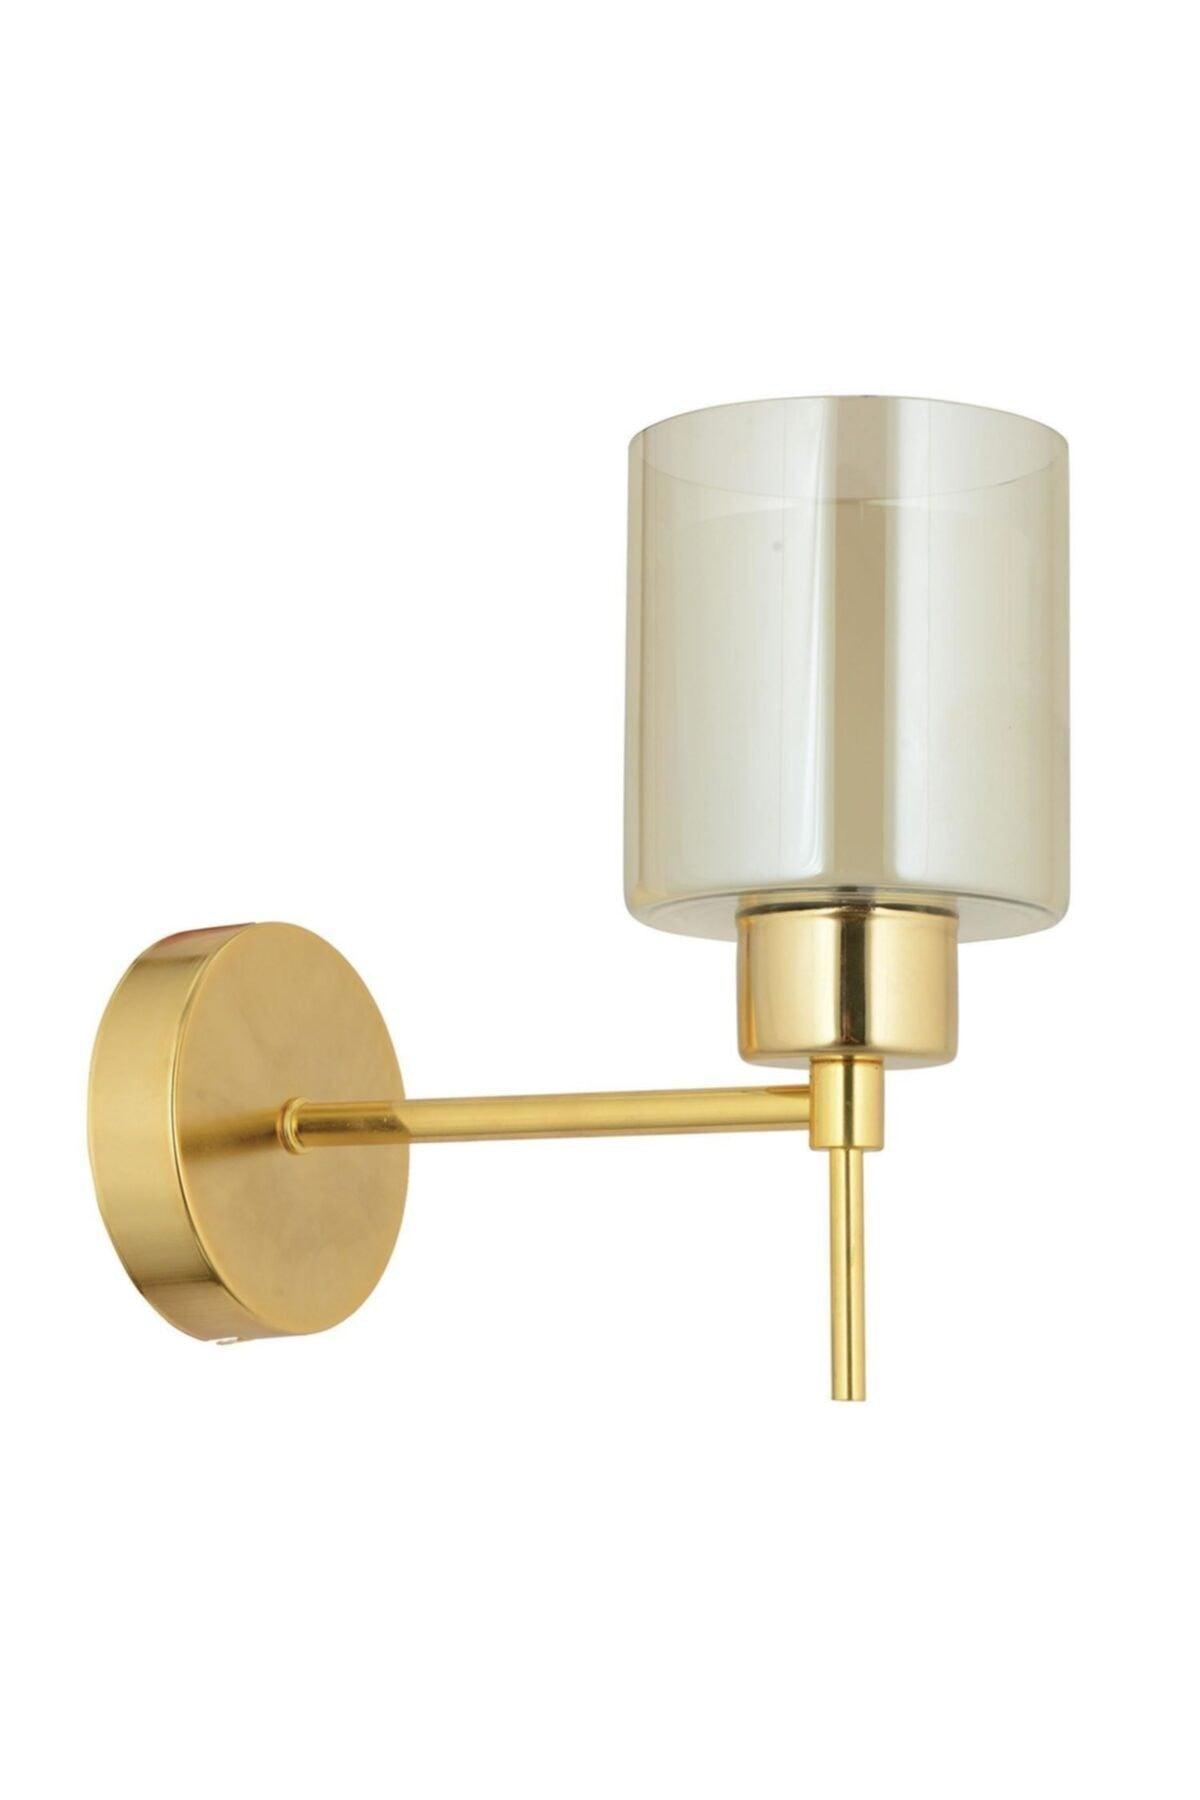 Cemre Gold Wall Lamp Modern Bedroom-Bed Head Design Wall Sconce - Swordslife